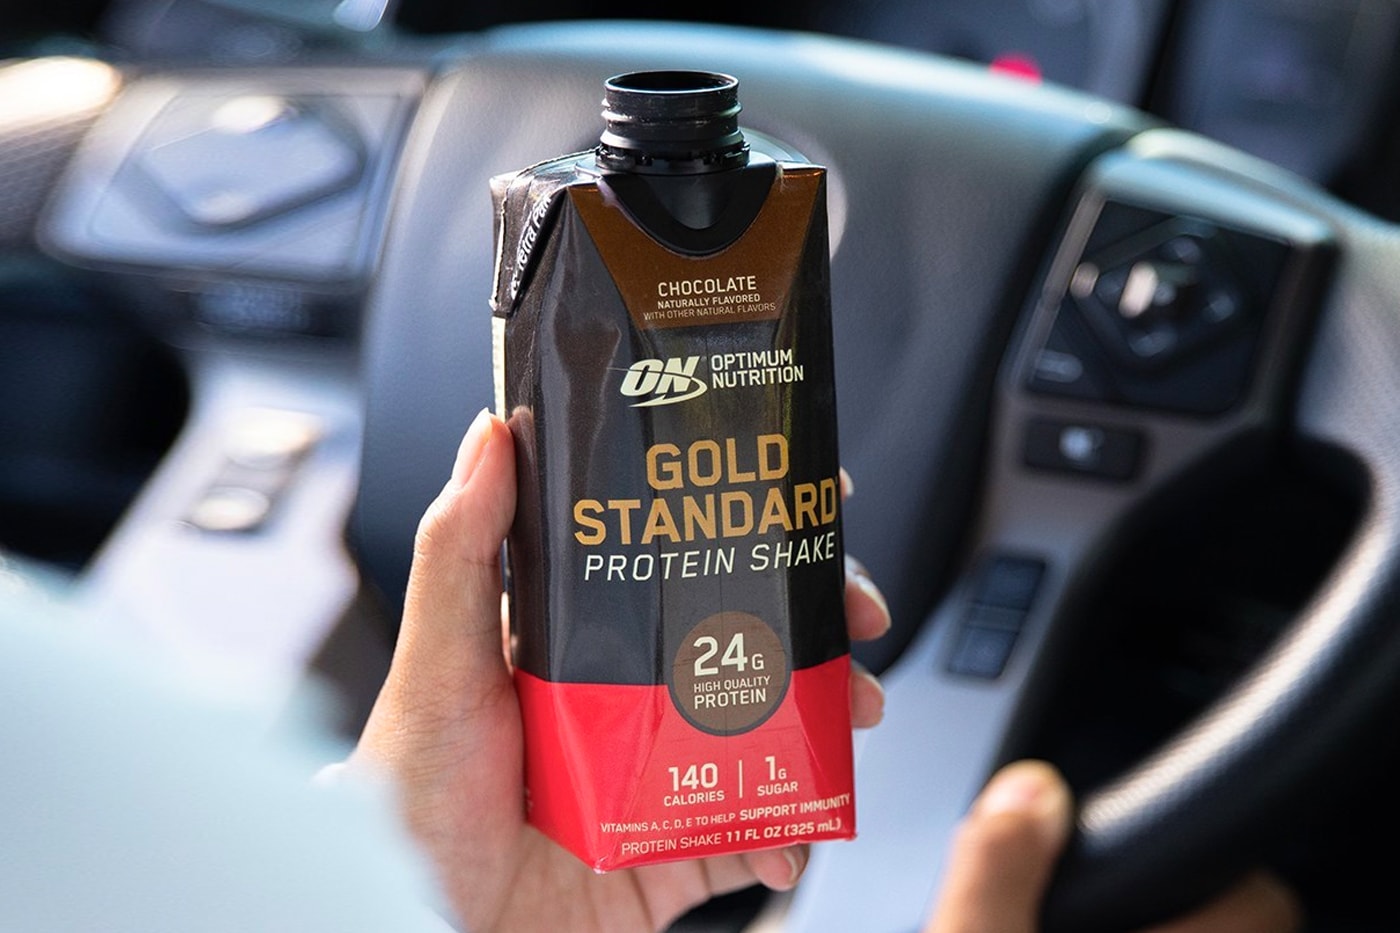 Gold Standard Support Immunity 24G Protein Shake, Chocolate